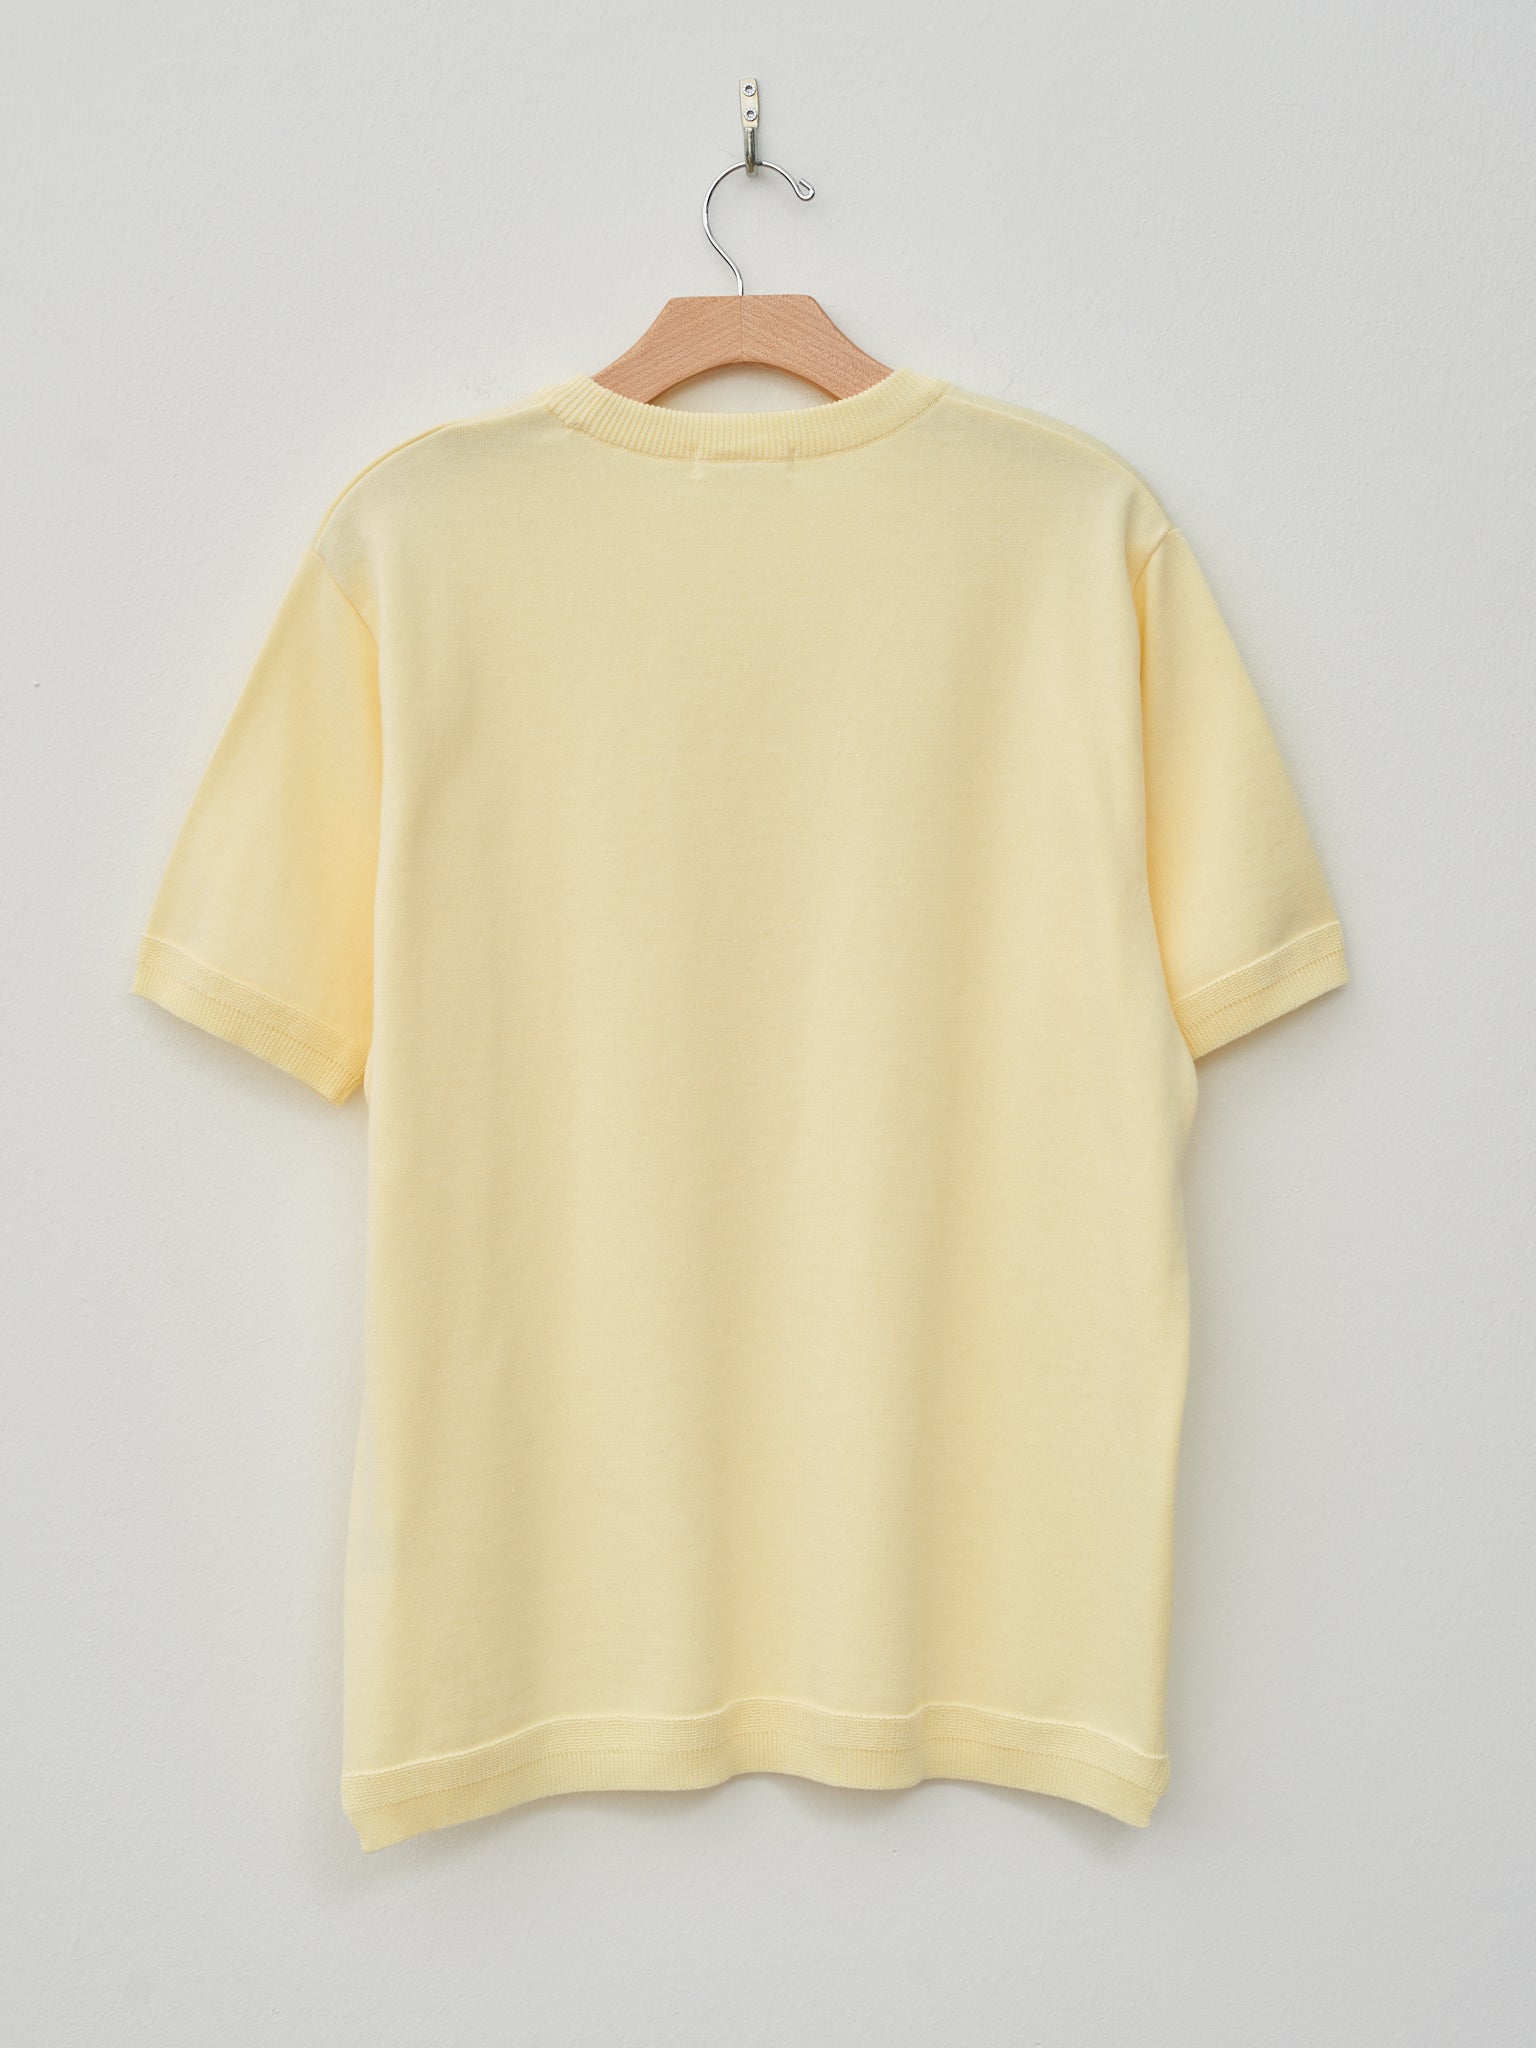 Namu Shop - Fujito C/N Knit T-Shirt - Lemon